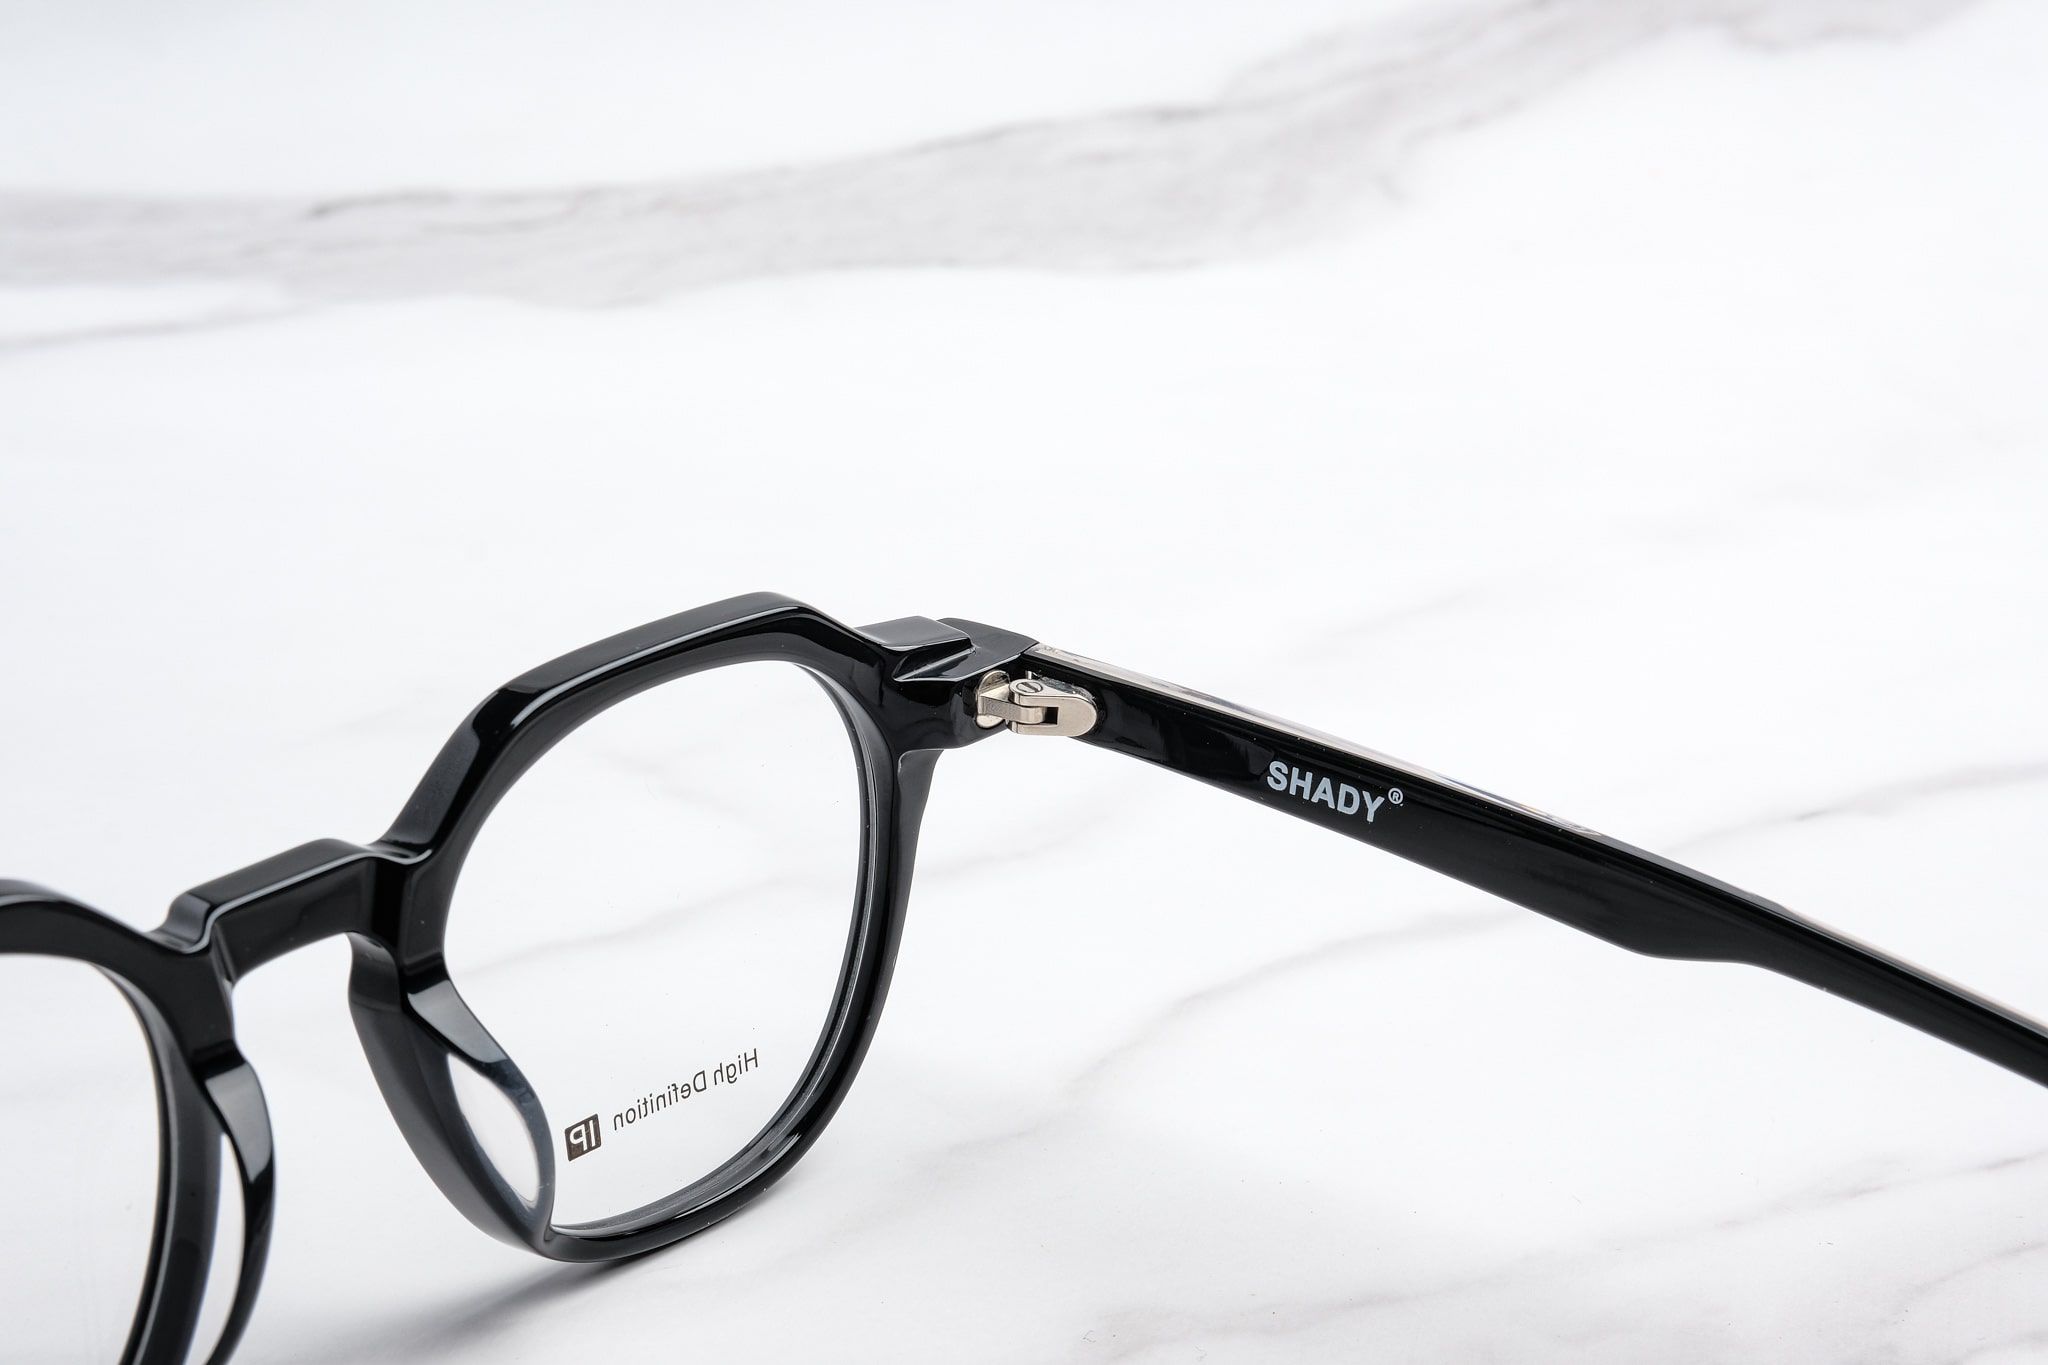  SHADY Eyewear - Glasses - G2237 